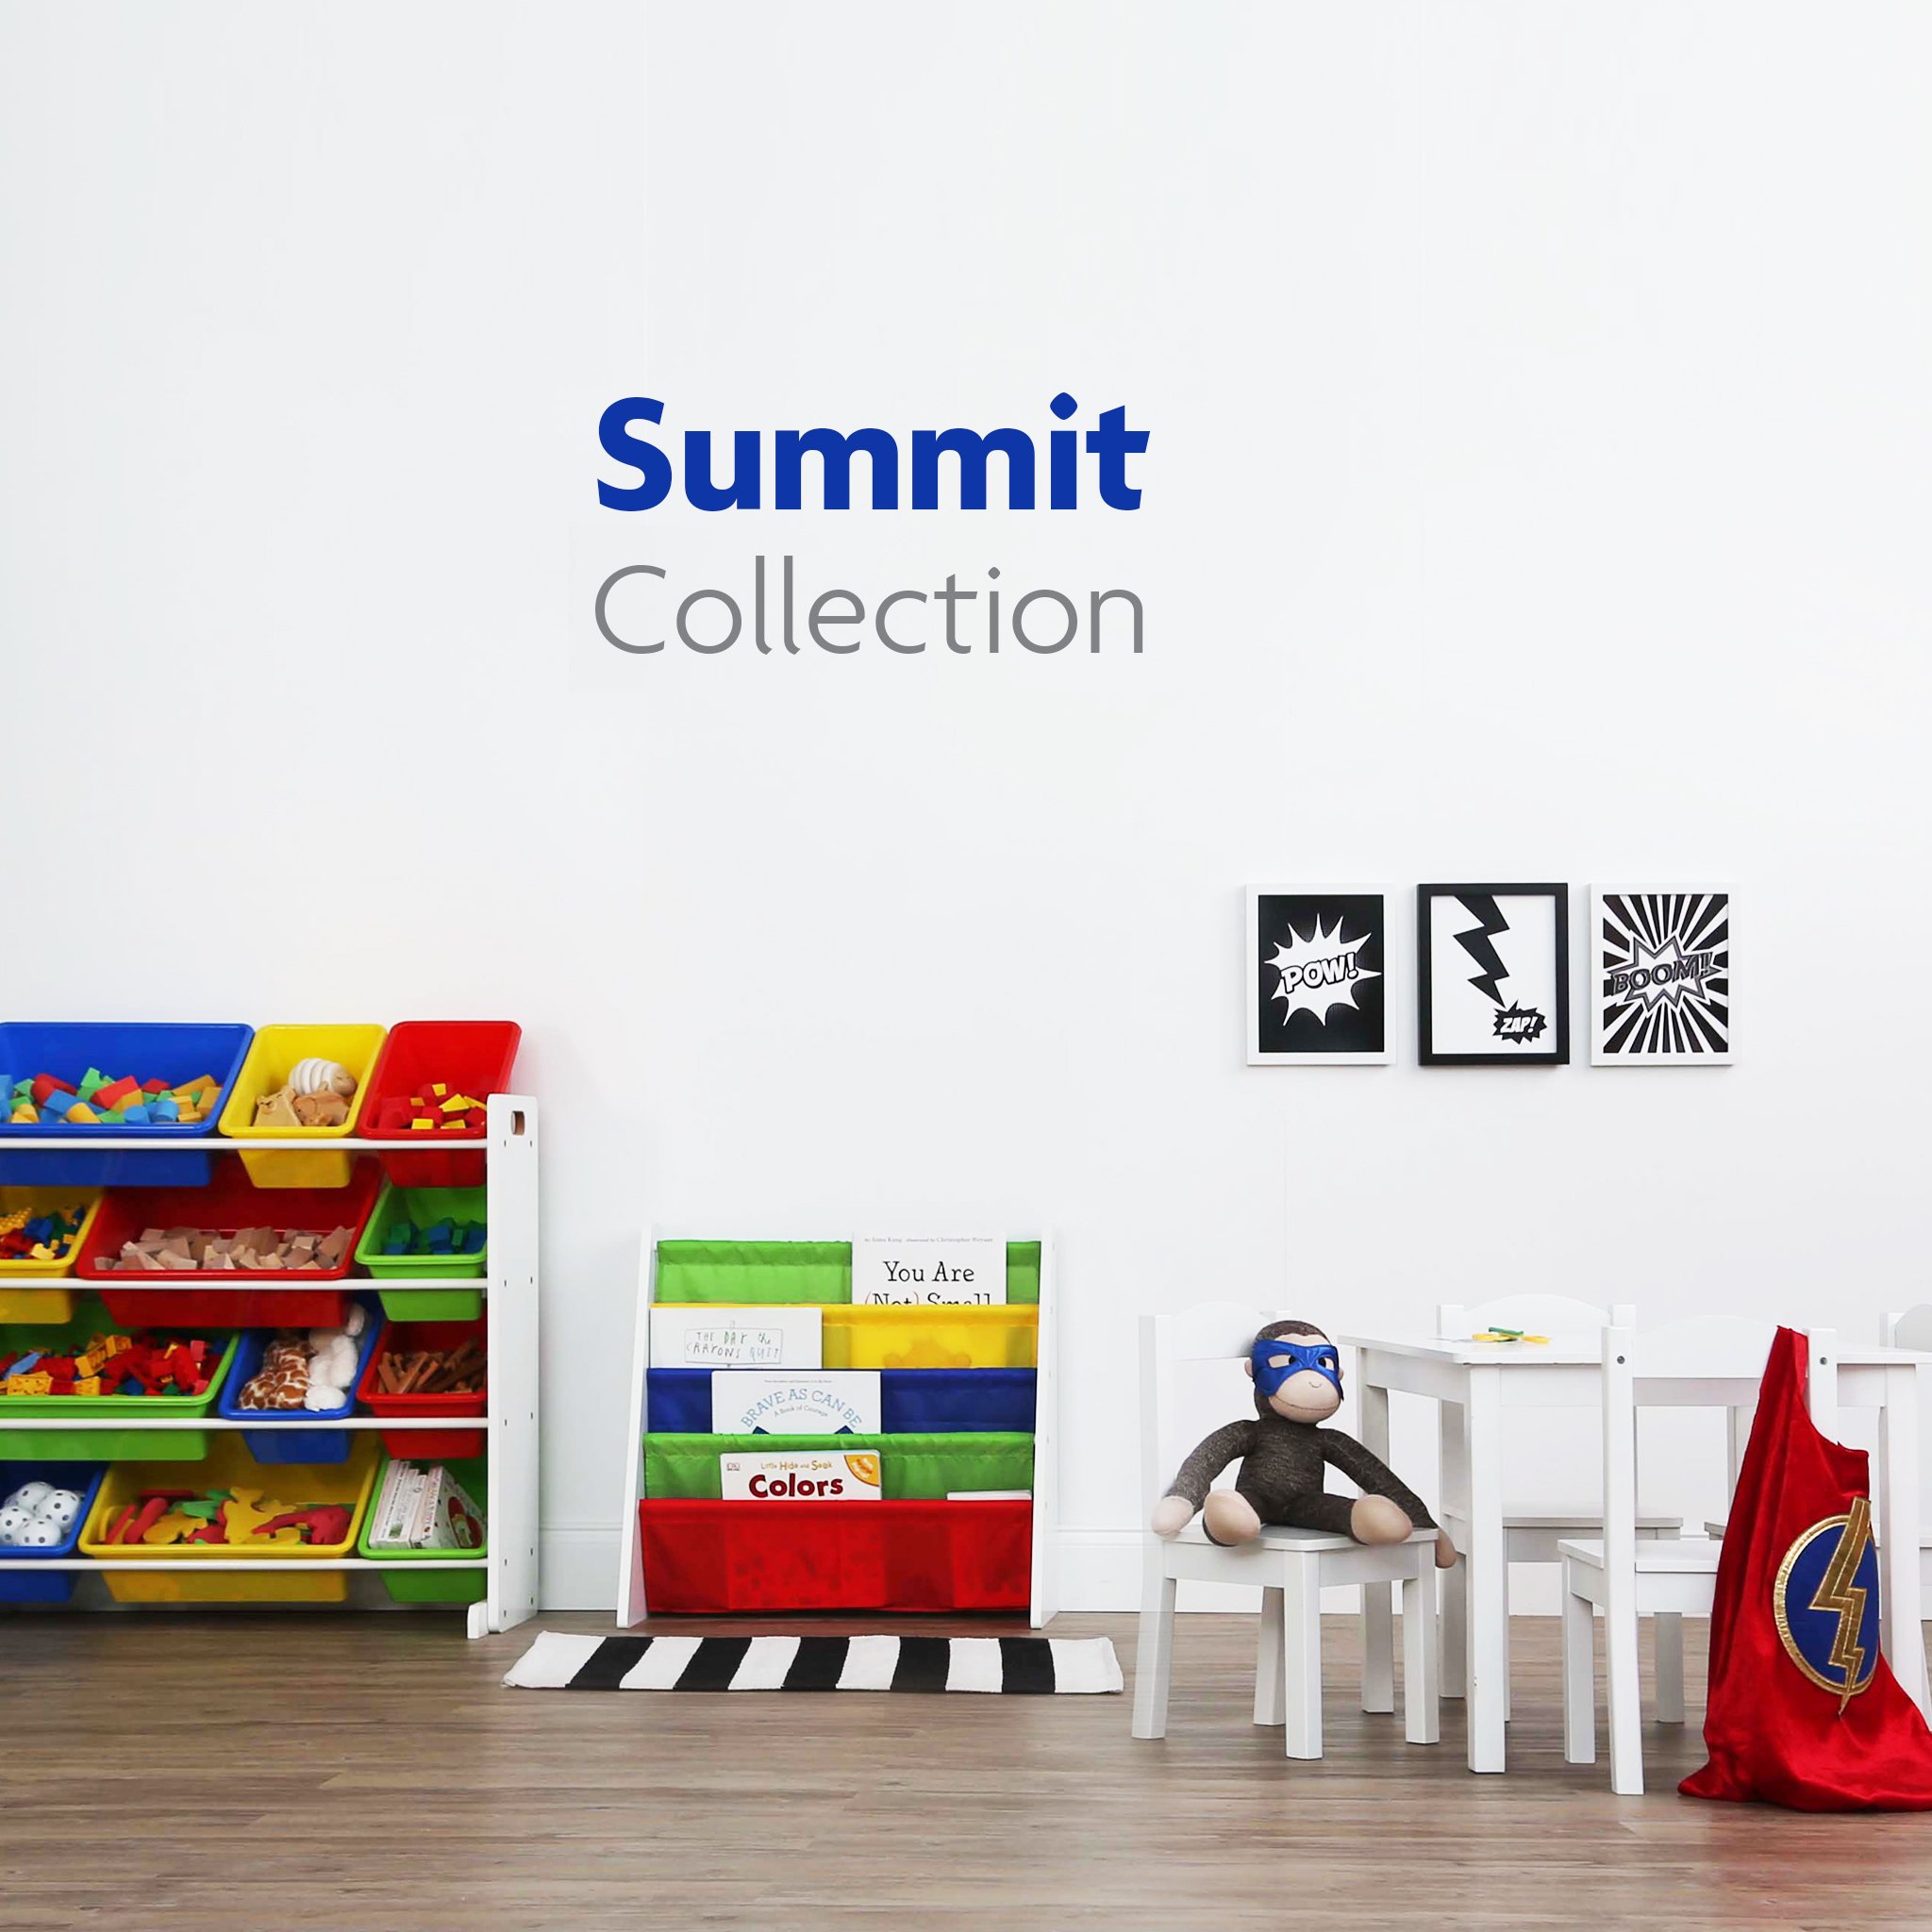 Humble Crew, White/Primary Kids' Toy Storage Organizer with 12 Plastic Bins